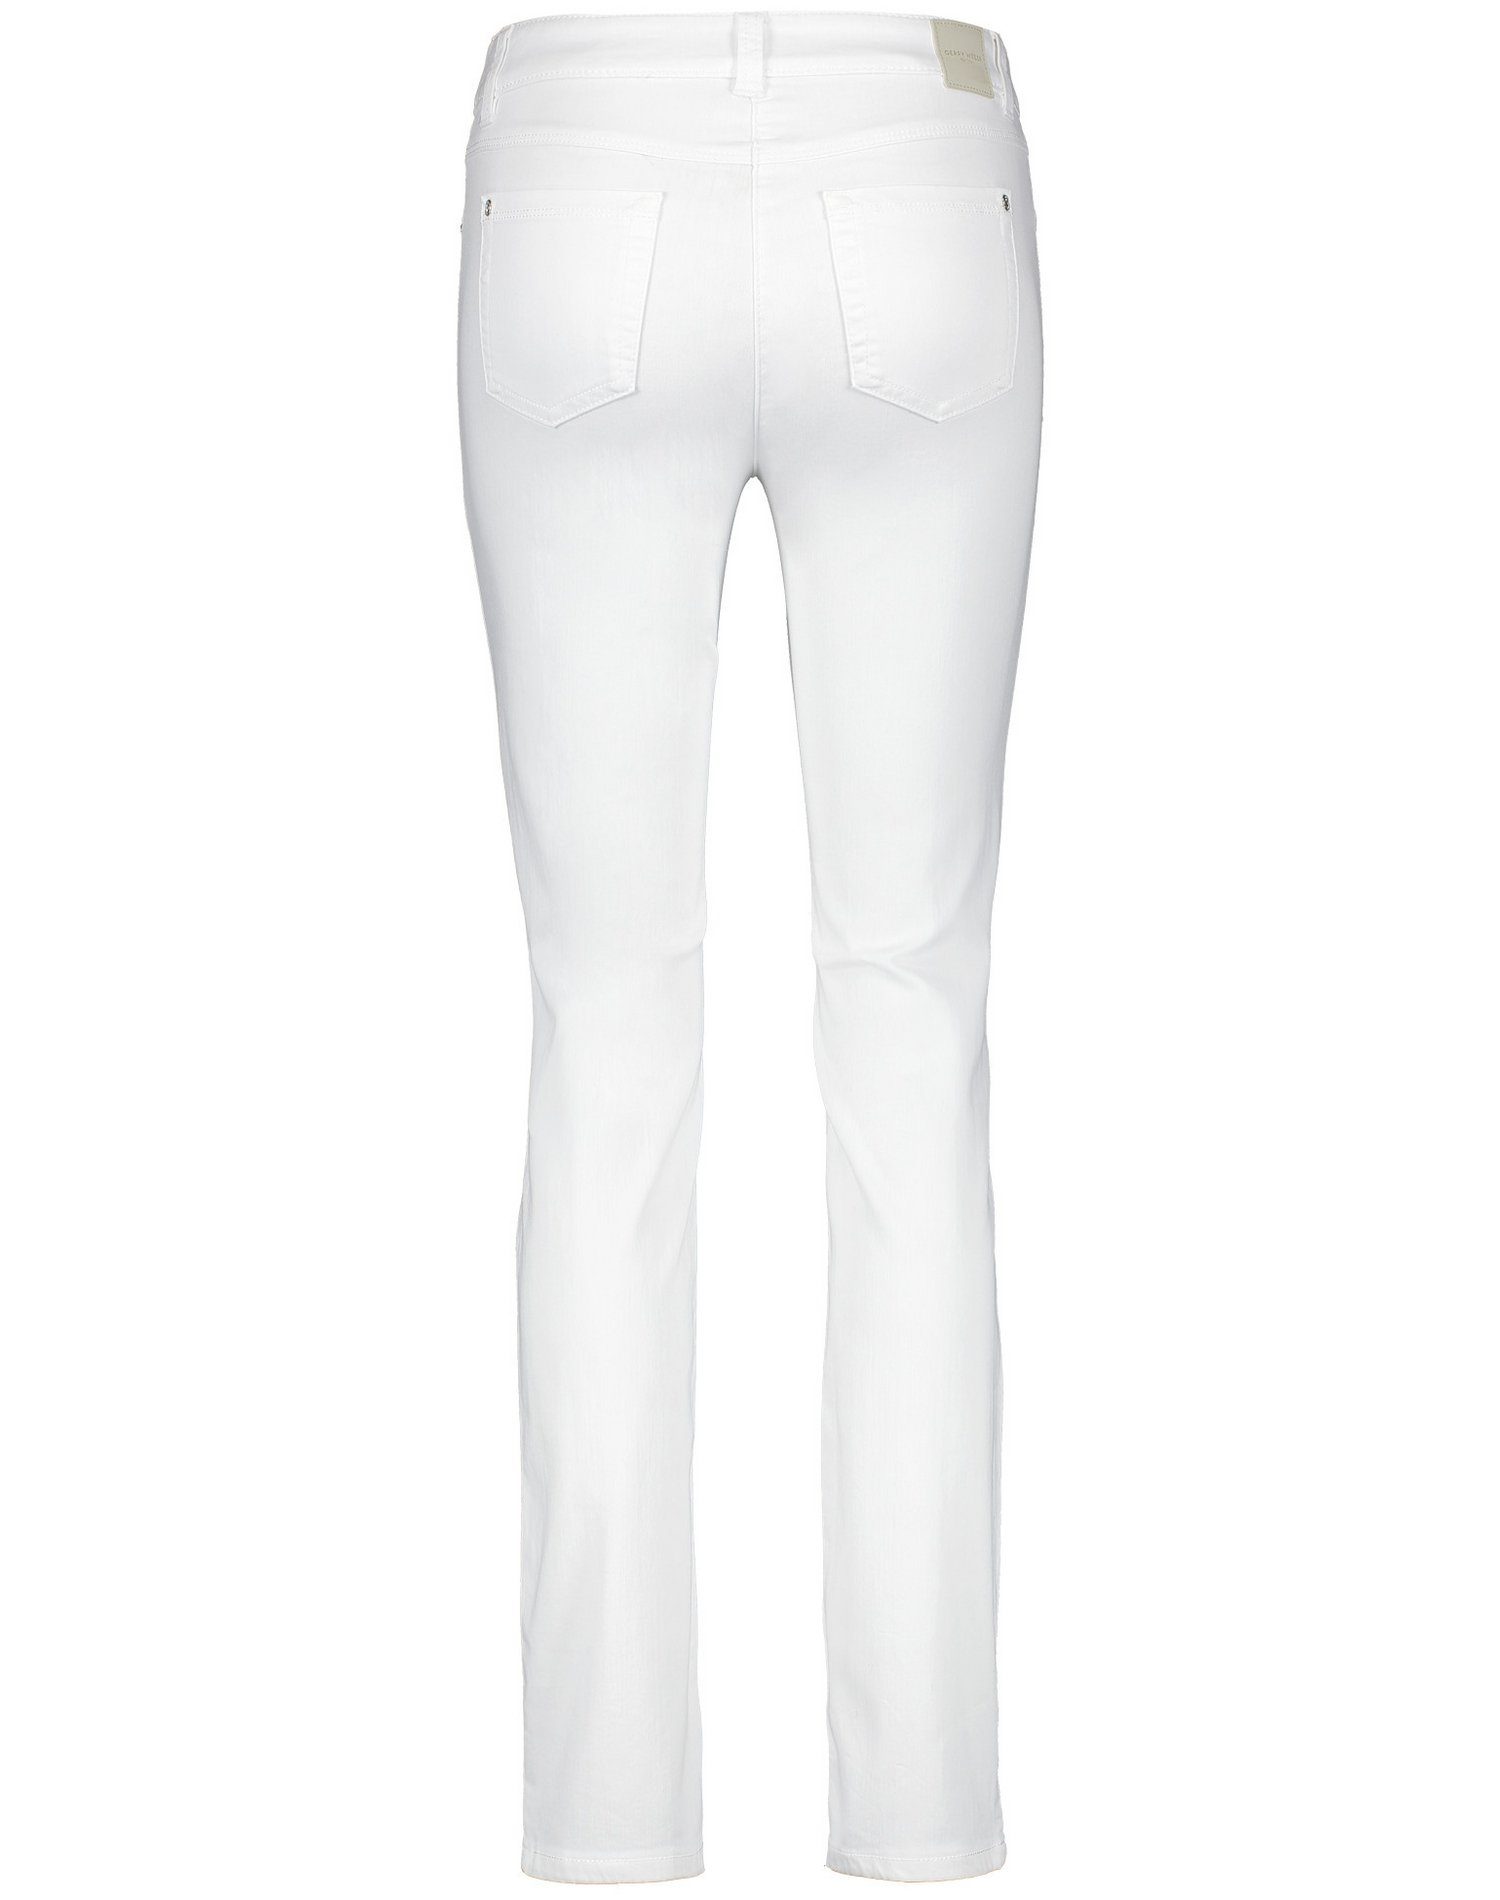 Hose GERRY Stretch-Jeans Best4me Figurformende 5-Pocket WEBER weiß/weiß